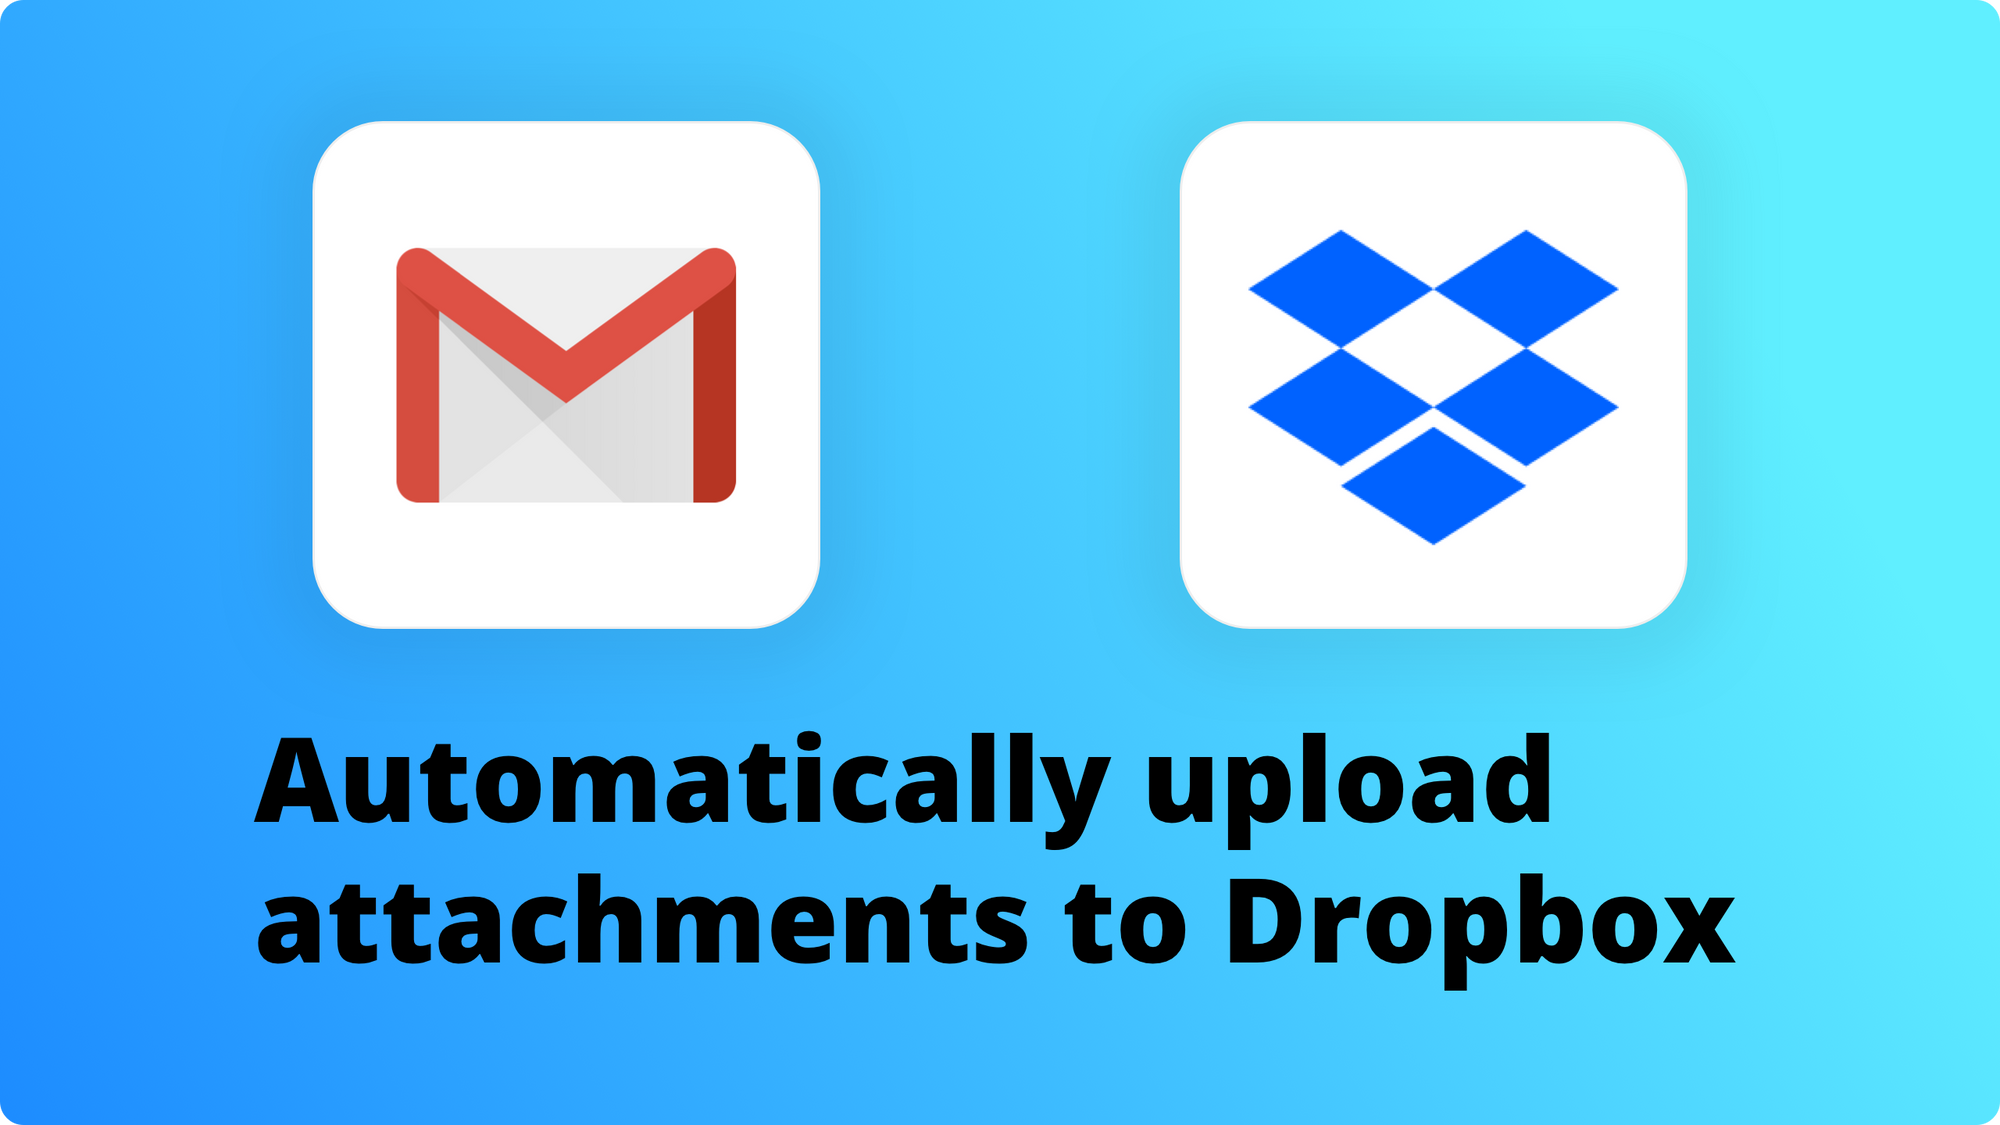 Saving attachments automatically to Dropbox